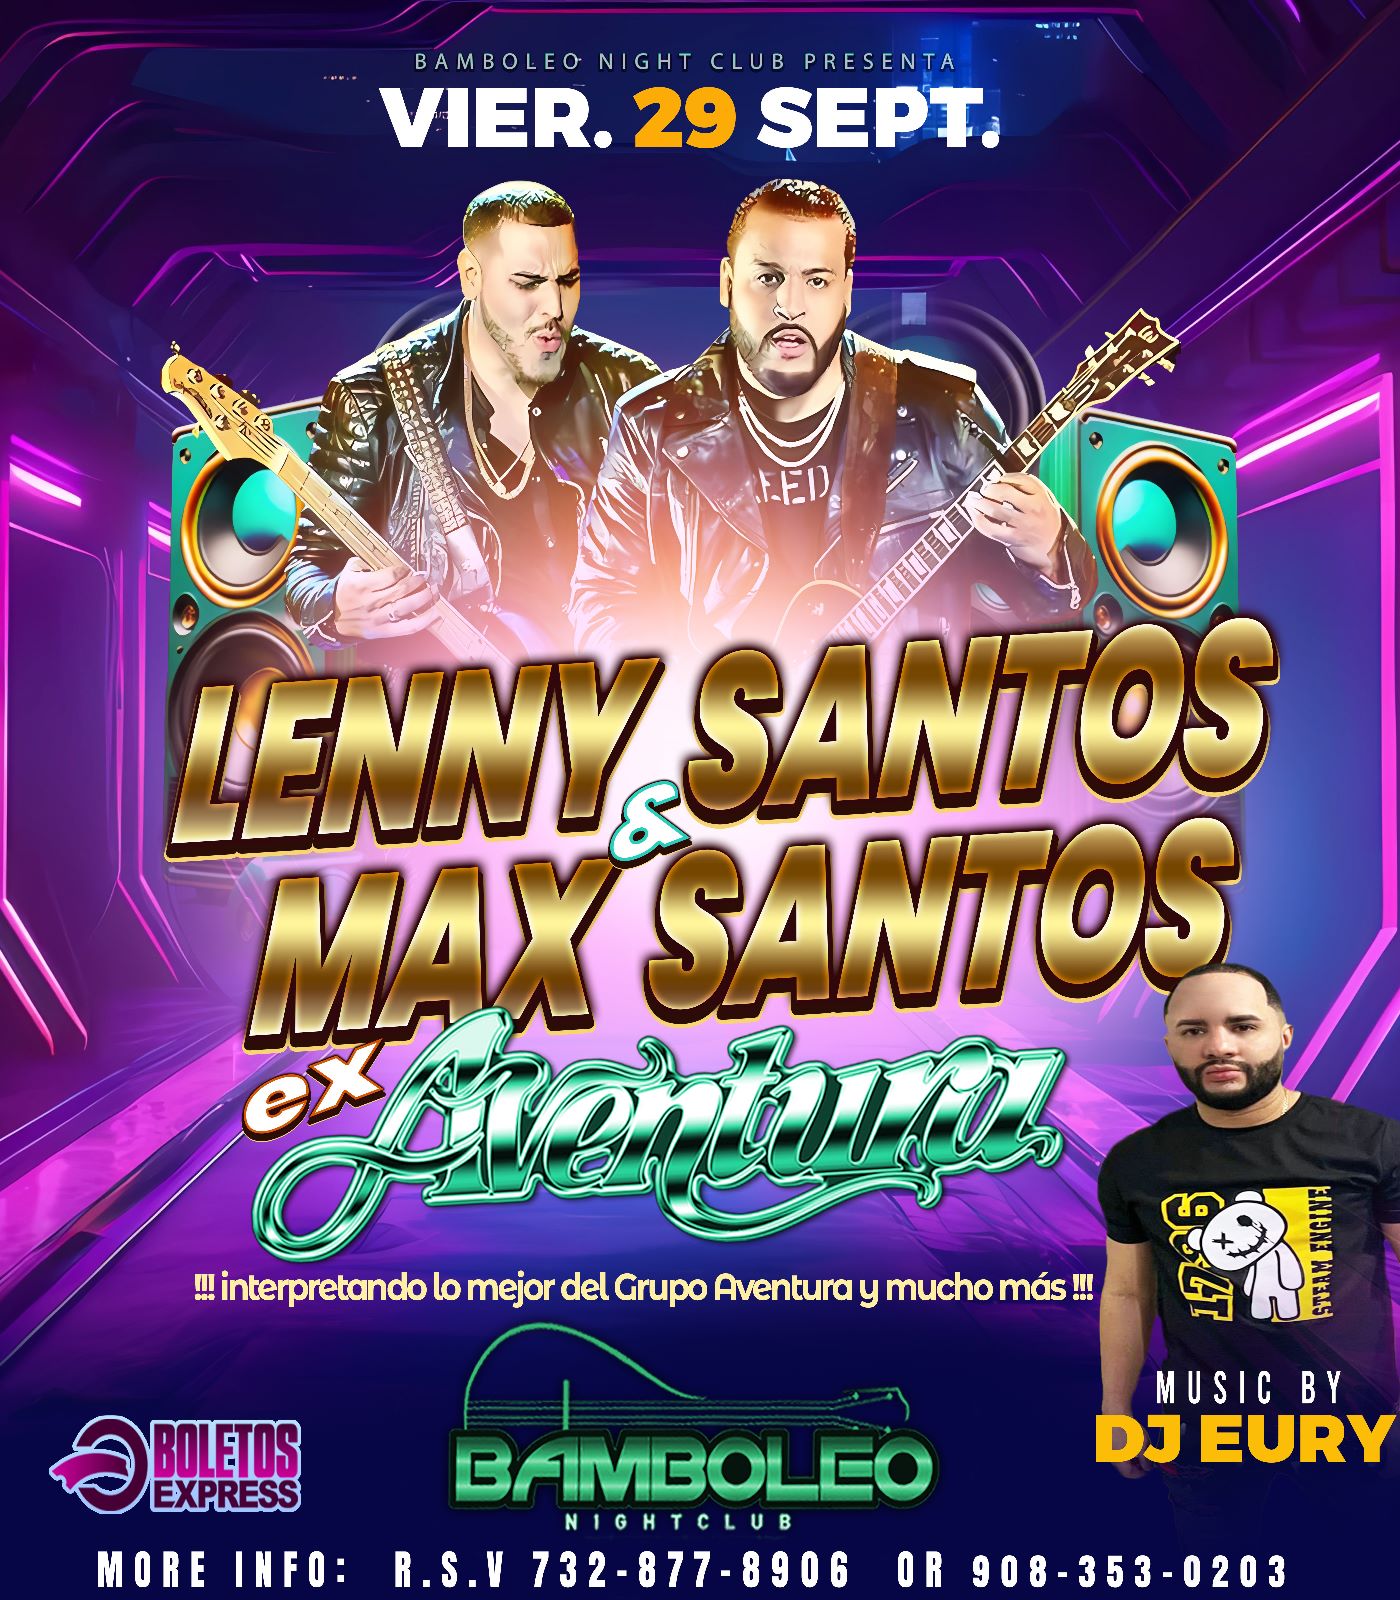 LENNY SANTOS & MAX SANTOS Tickets - BoletosExpress